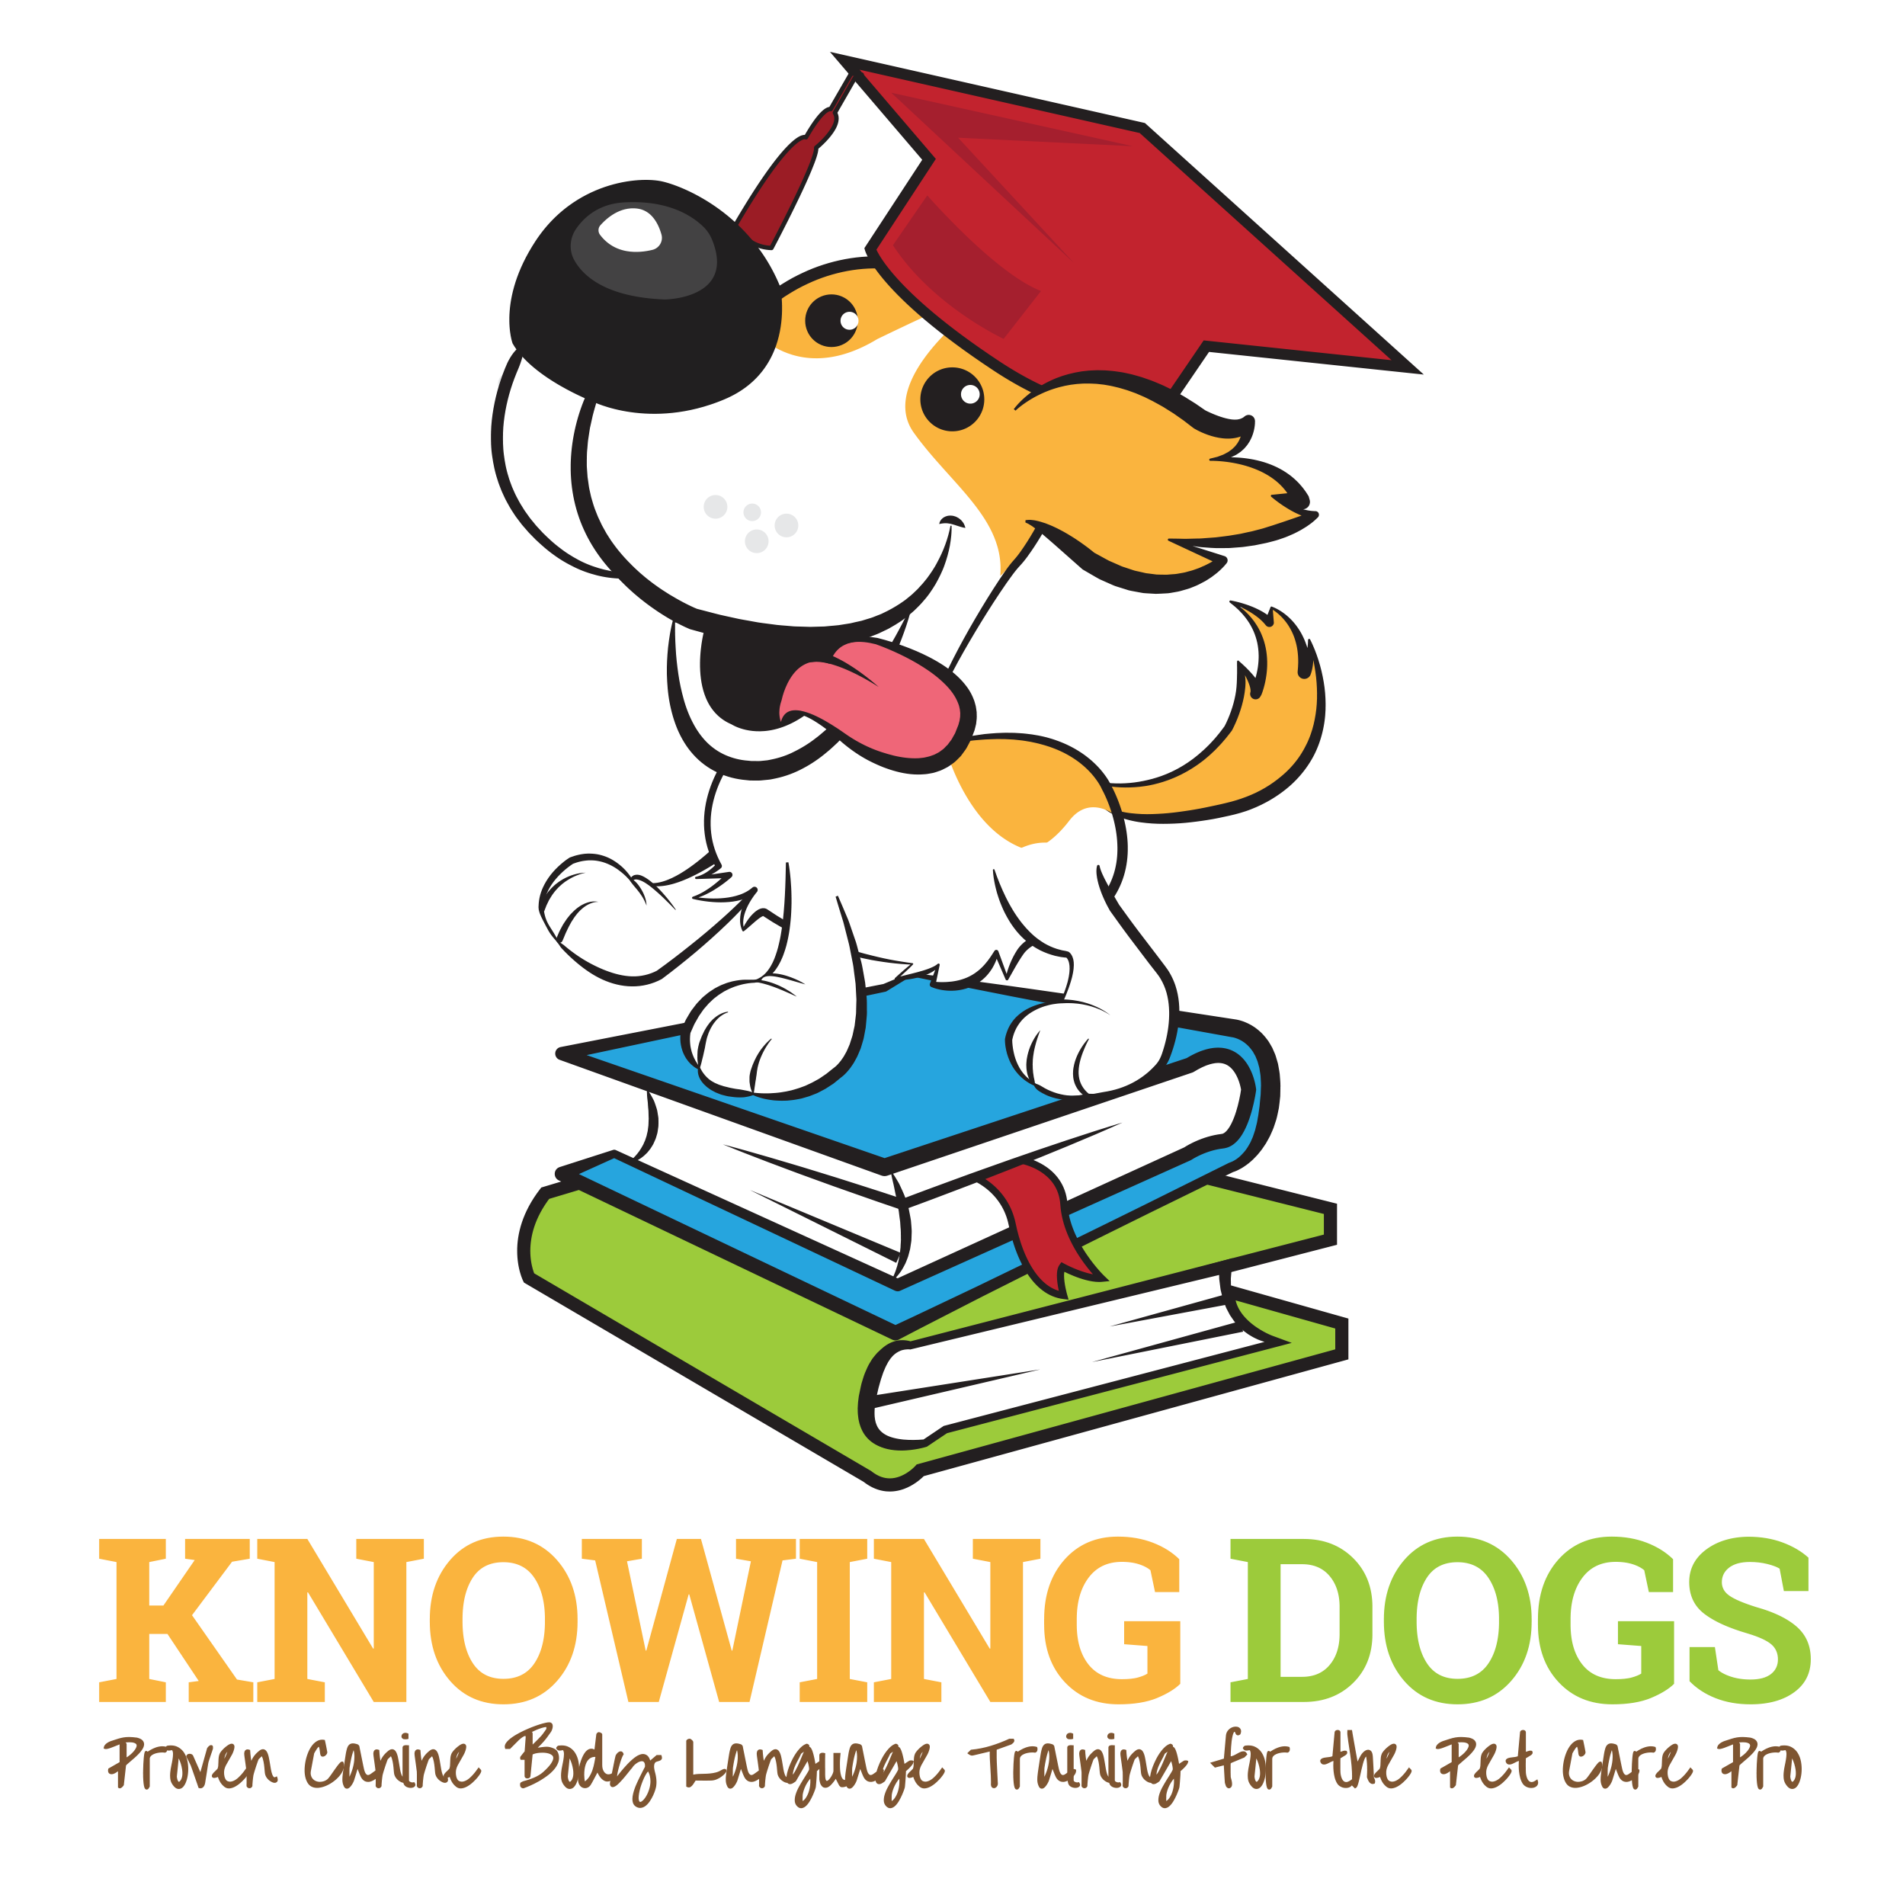 Additional workbook sets - Knowing Dogs 201 Digital Download Staff Workbook